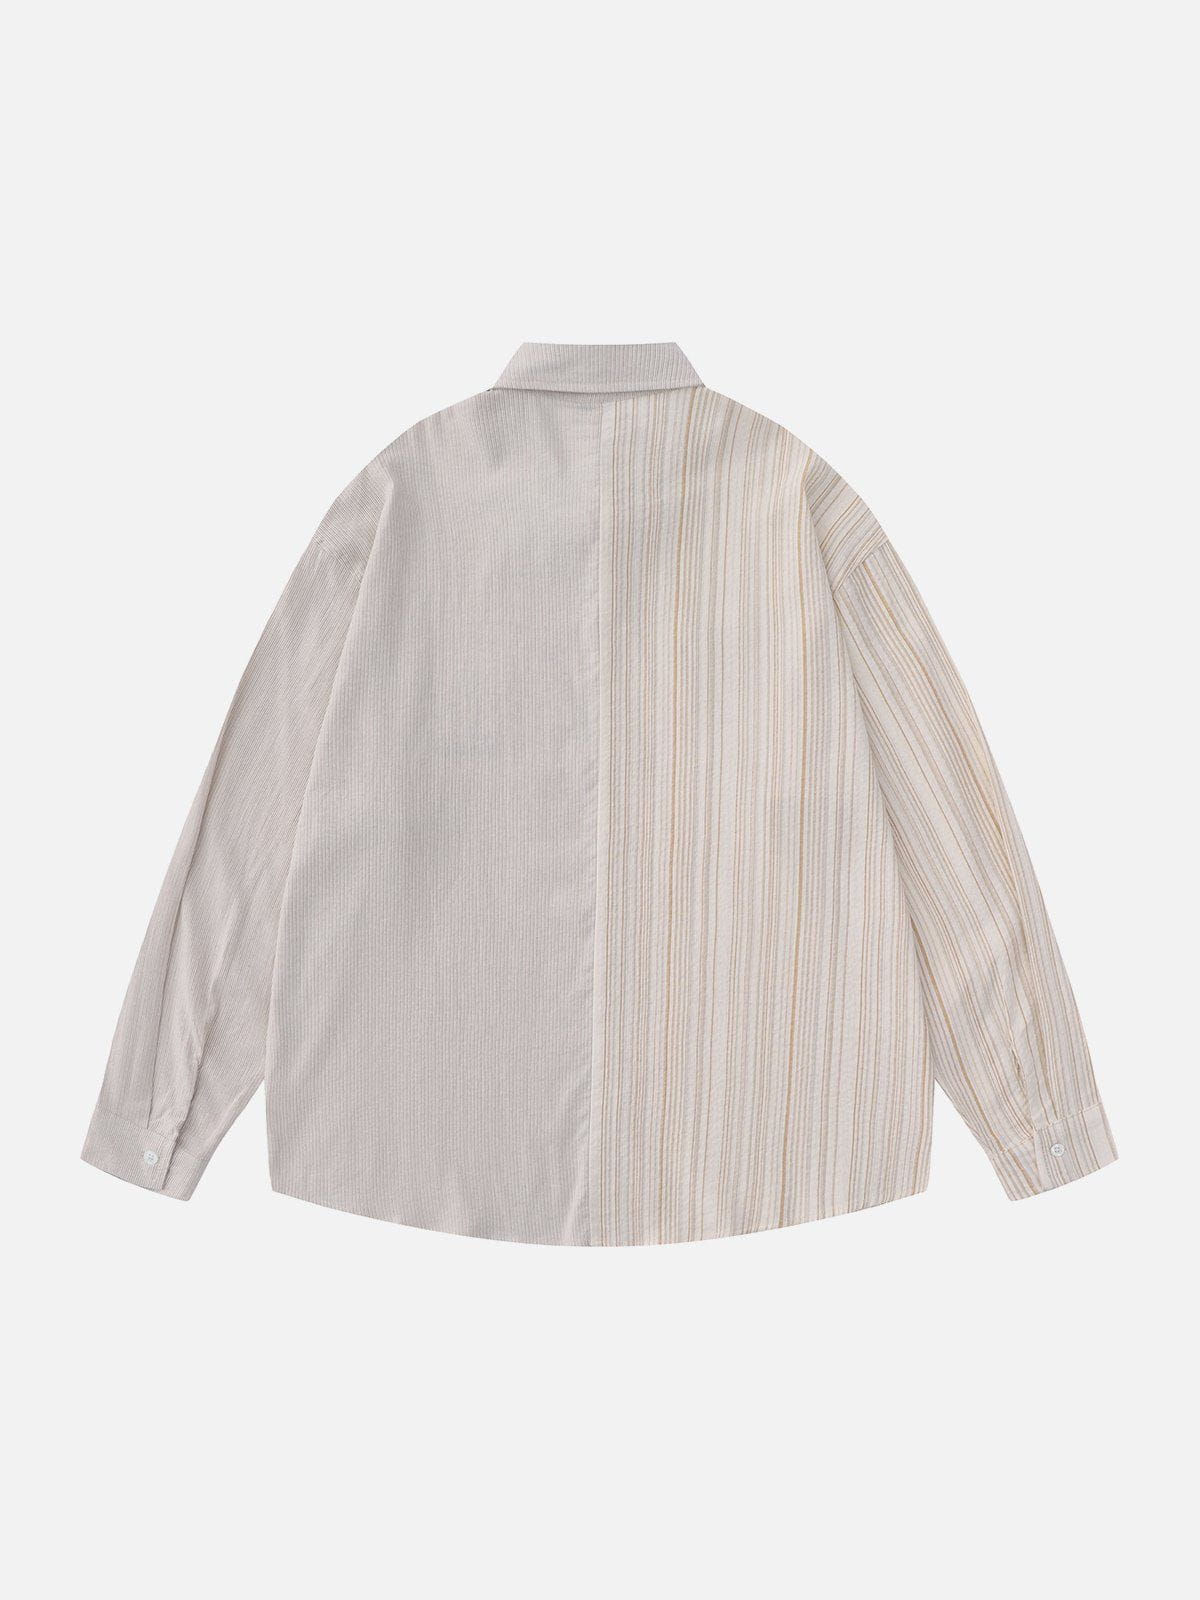 Majesda® - Patchwork Stripe Long Sleeve Shirt outfit ideas streetwear fashion